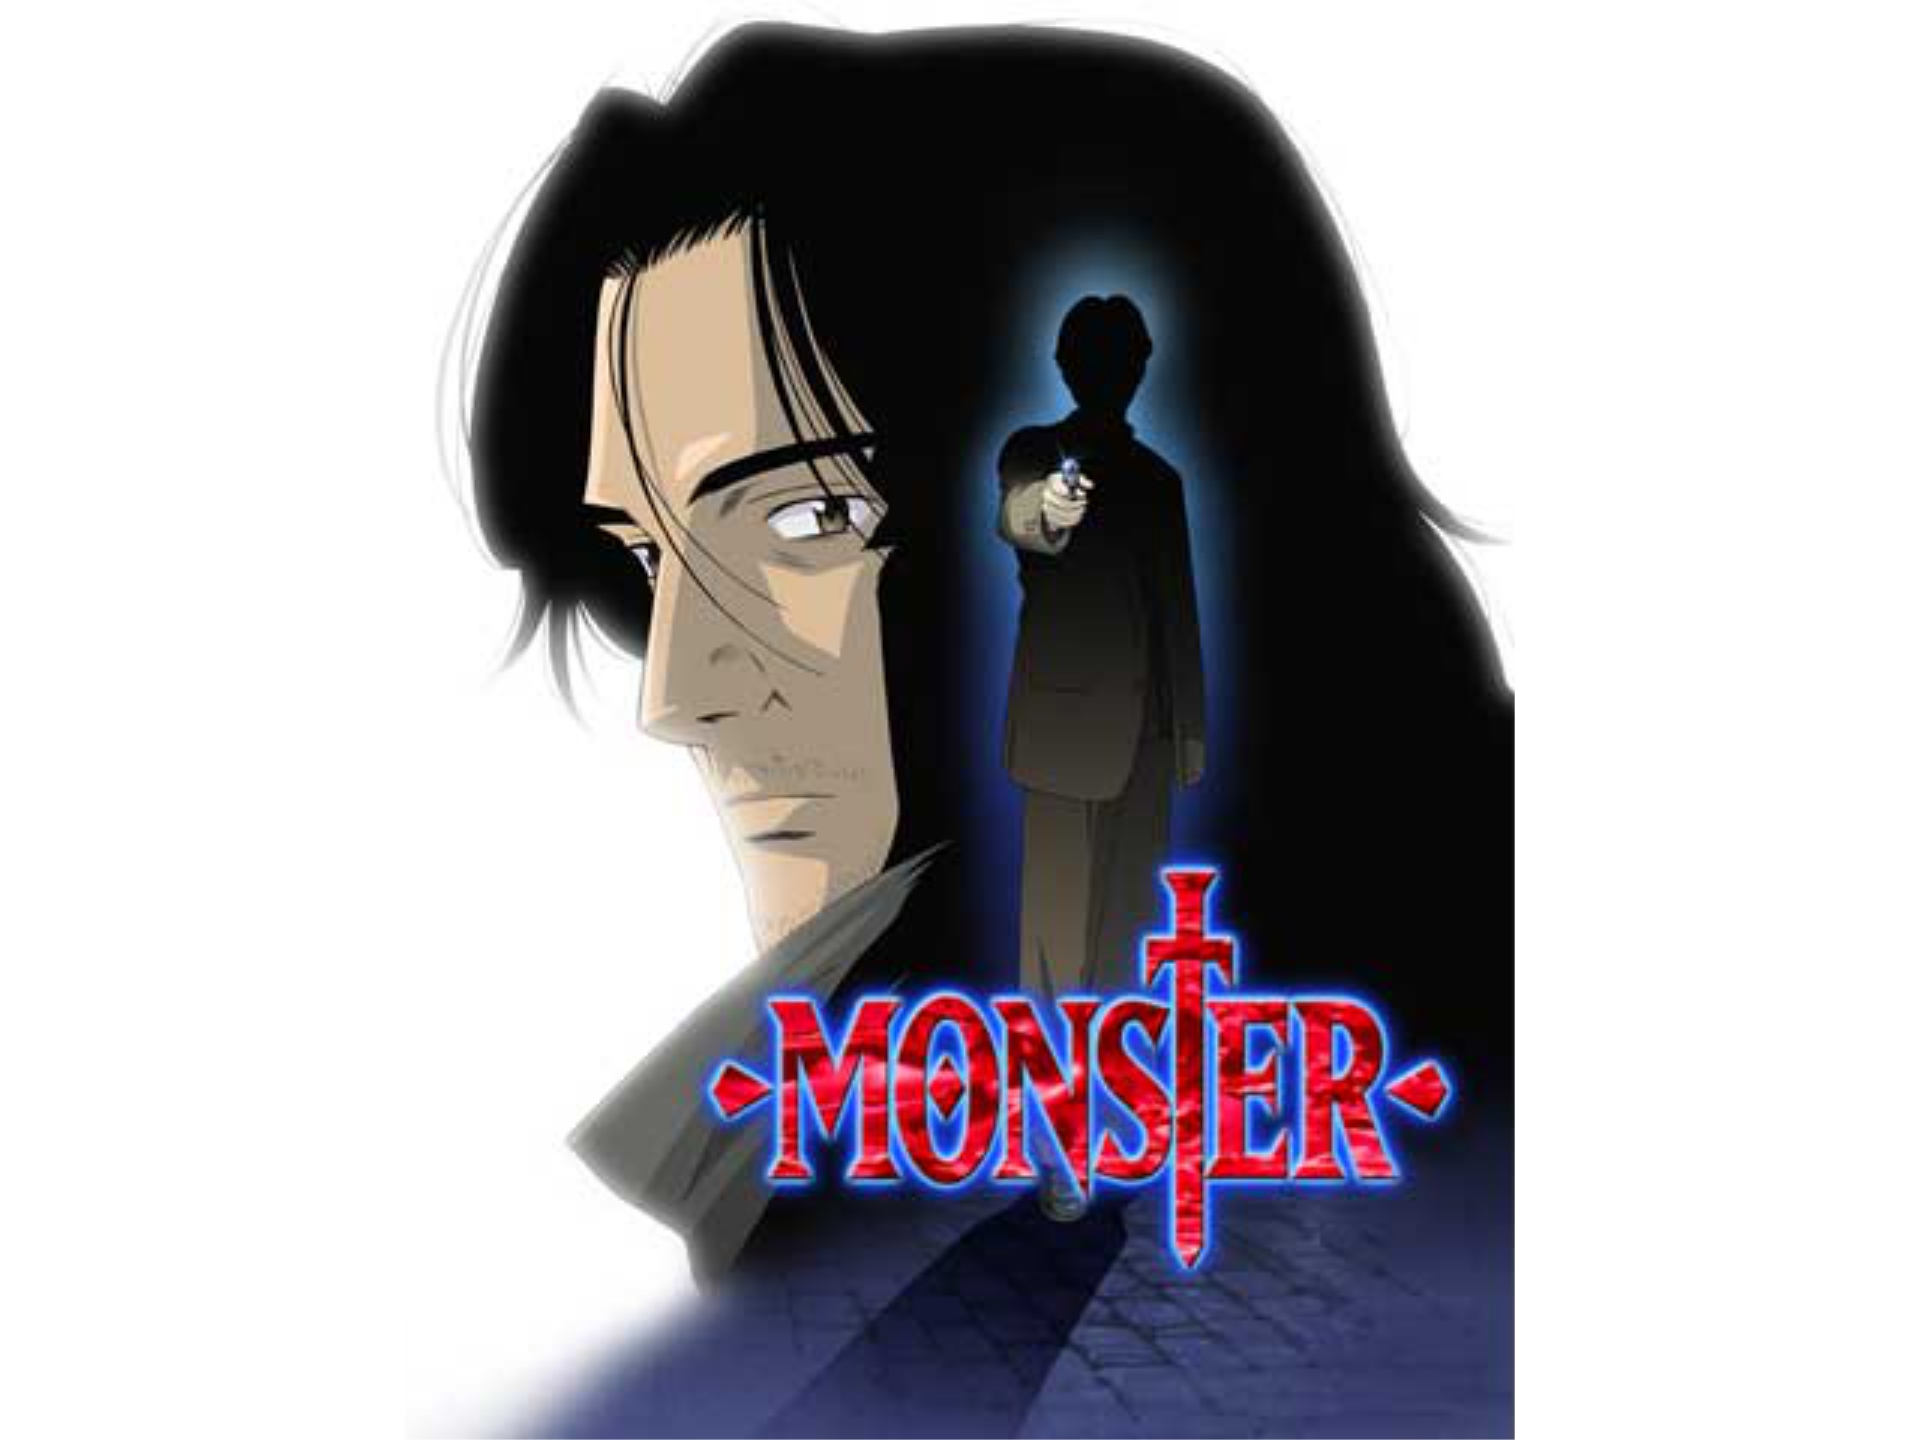 Monster Chapter 7 Chapter 11のまとめフル動画 初月無料 動画配信サービスのビデオマーケット